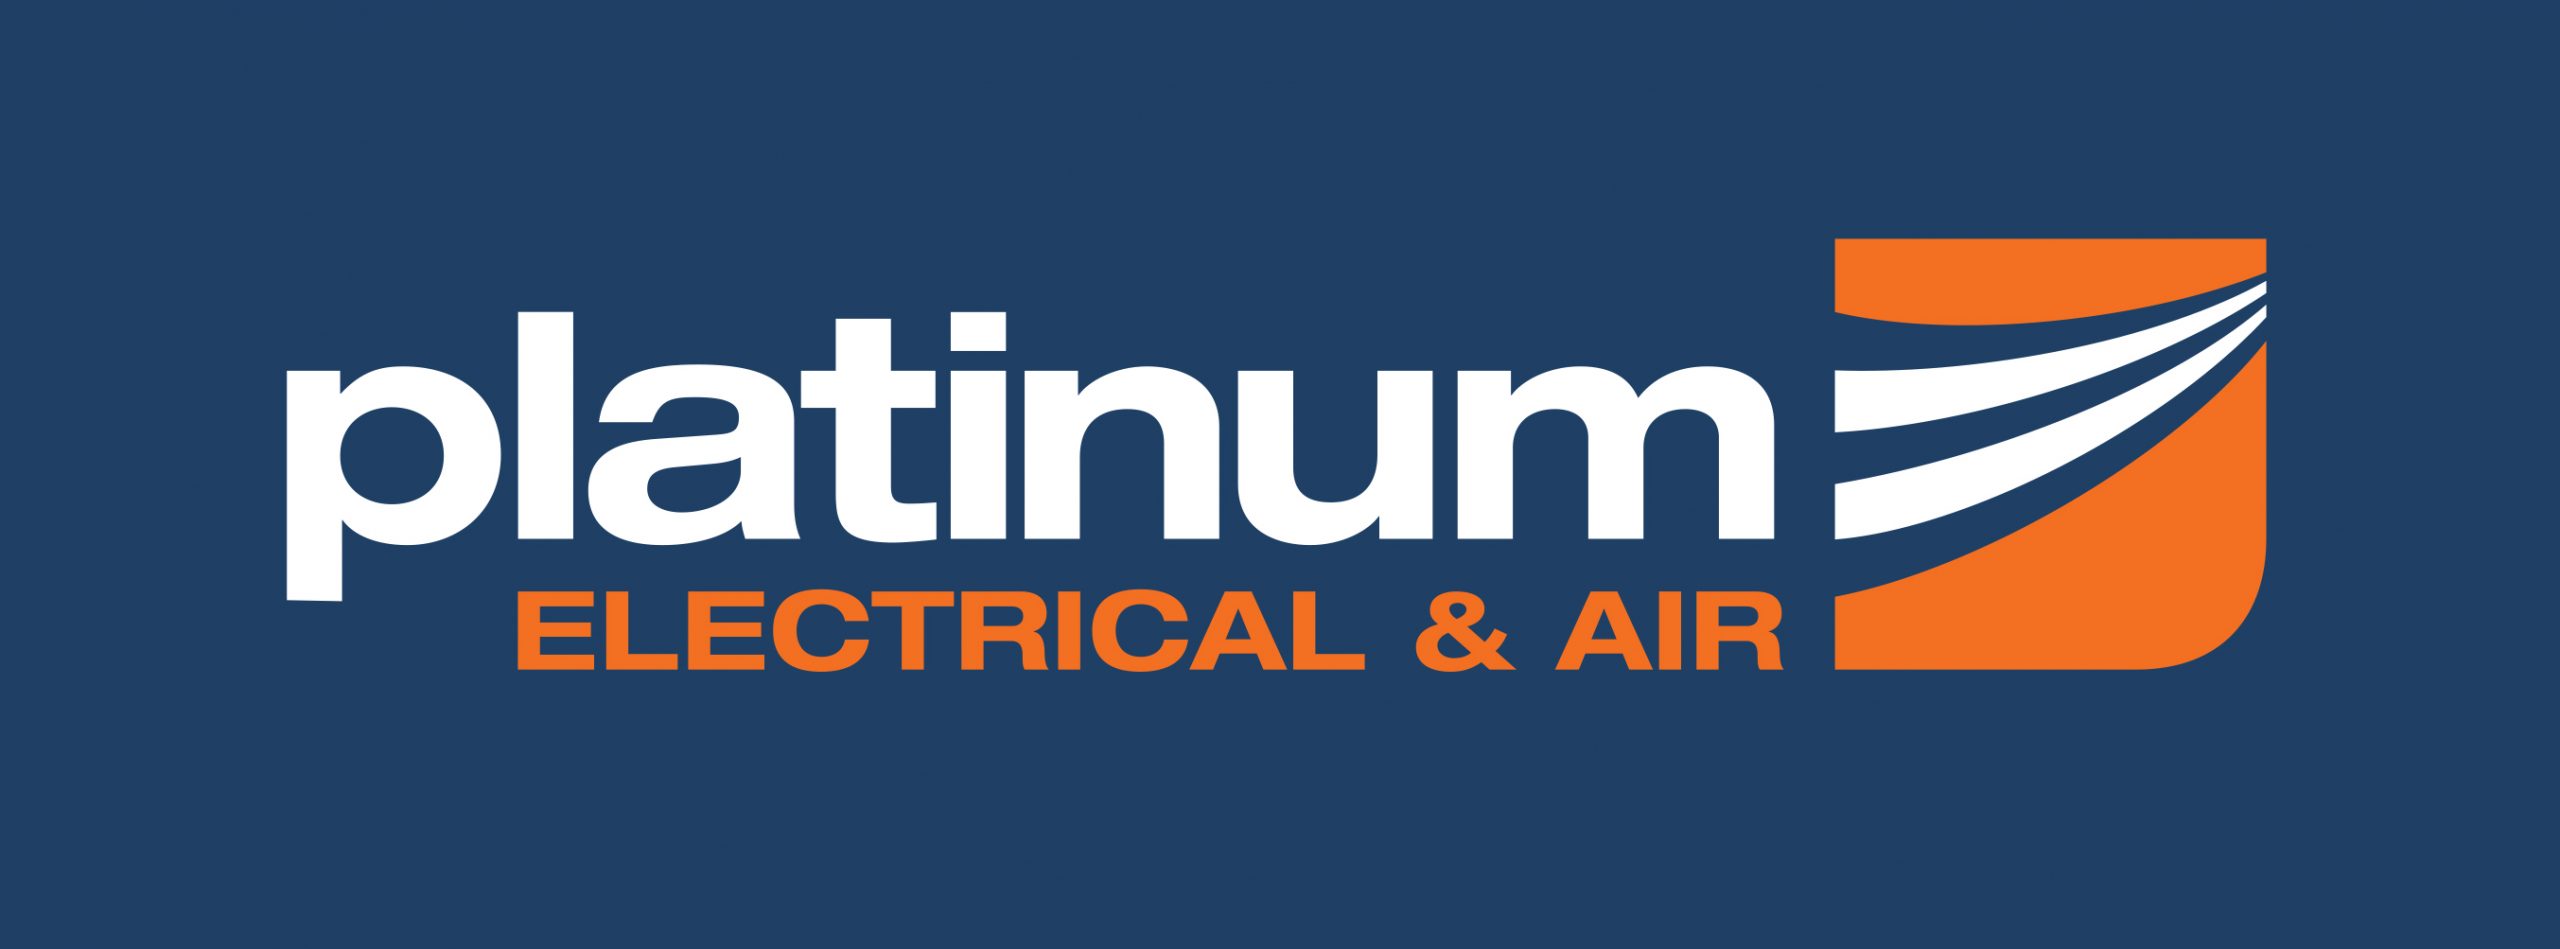 Platinum Electrical & Air 2015 LogosPLAT_Electrical&Air_REVERSE